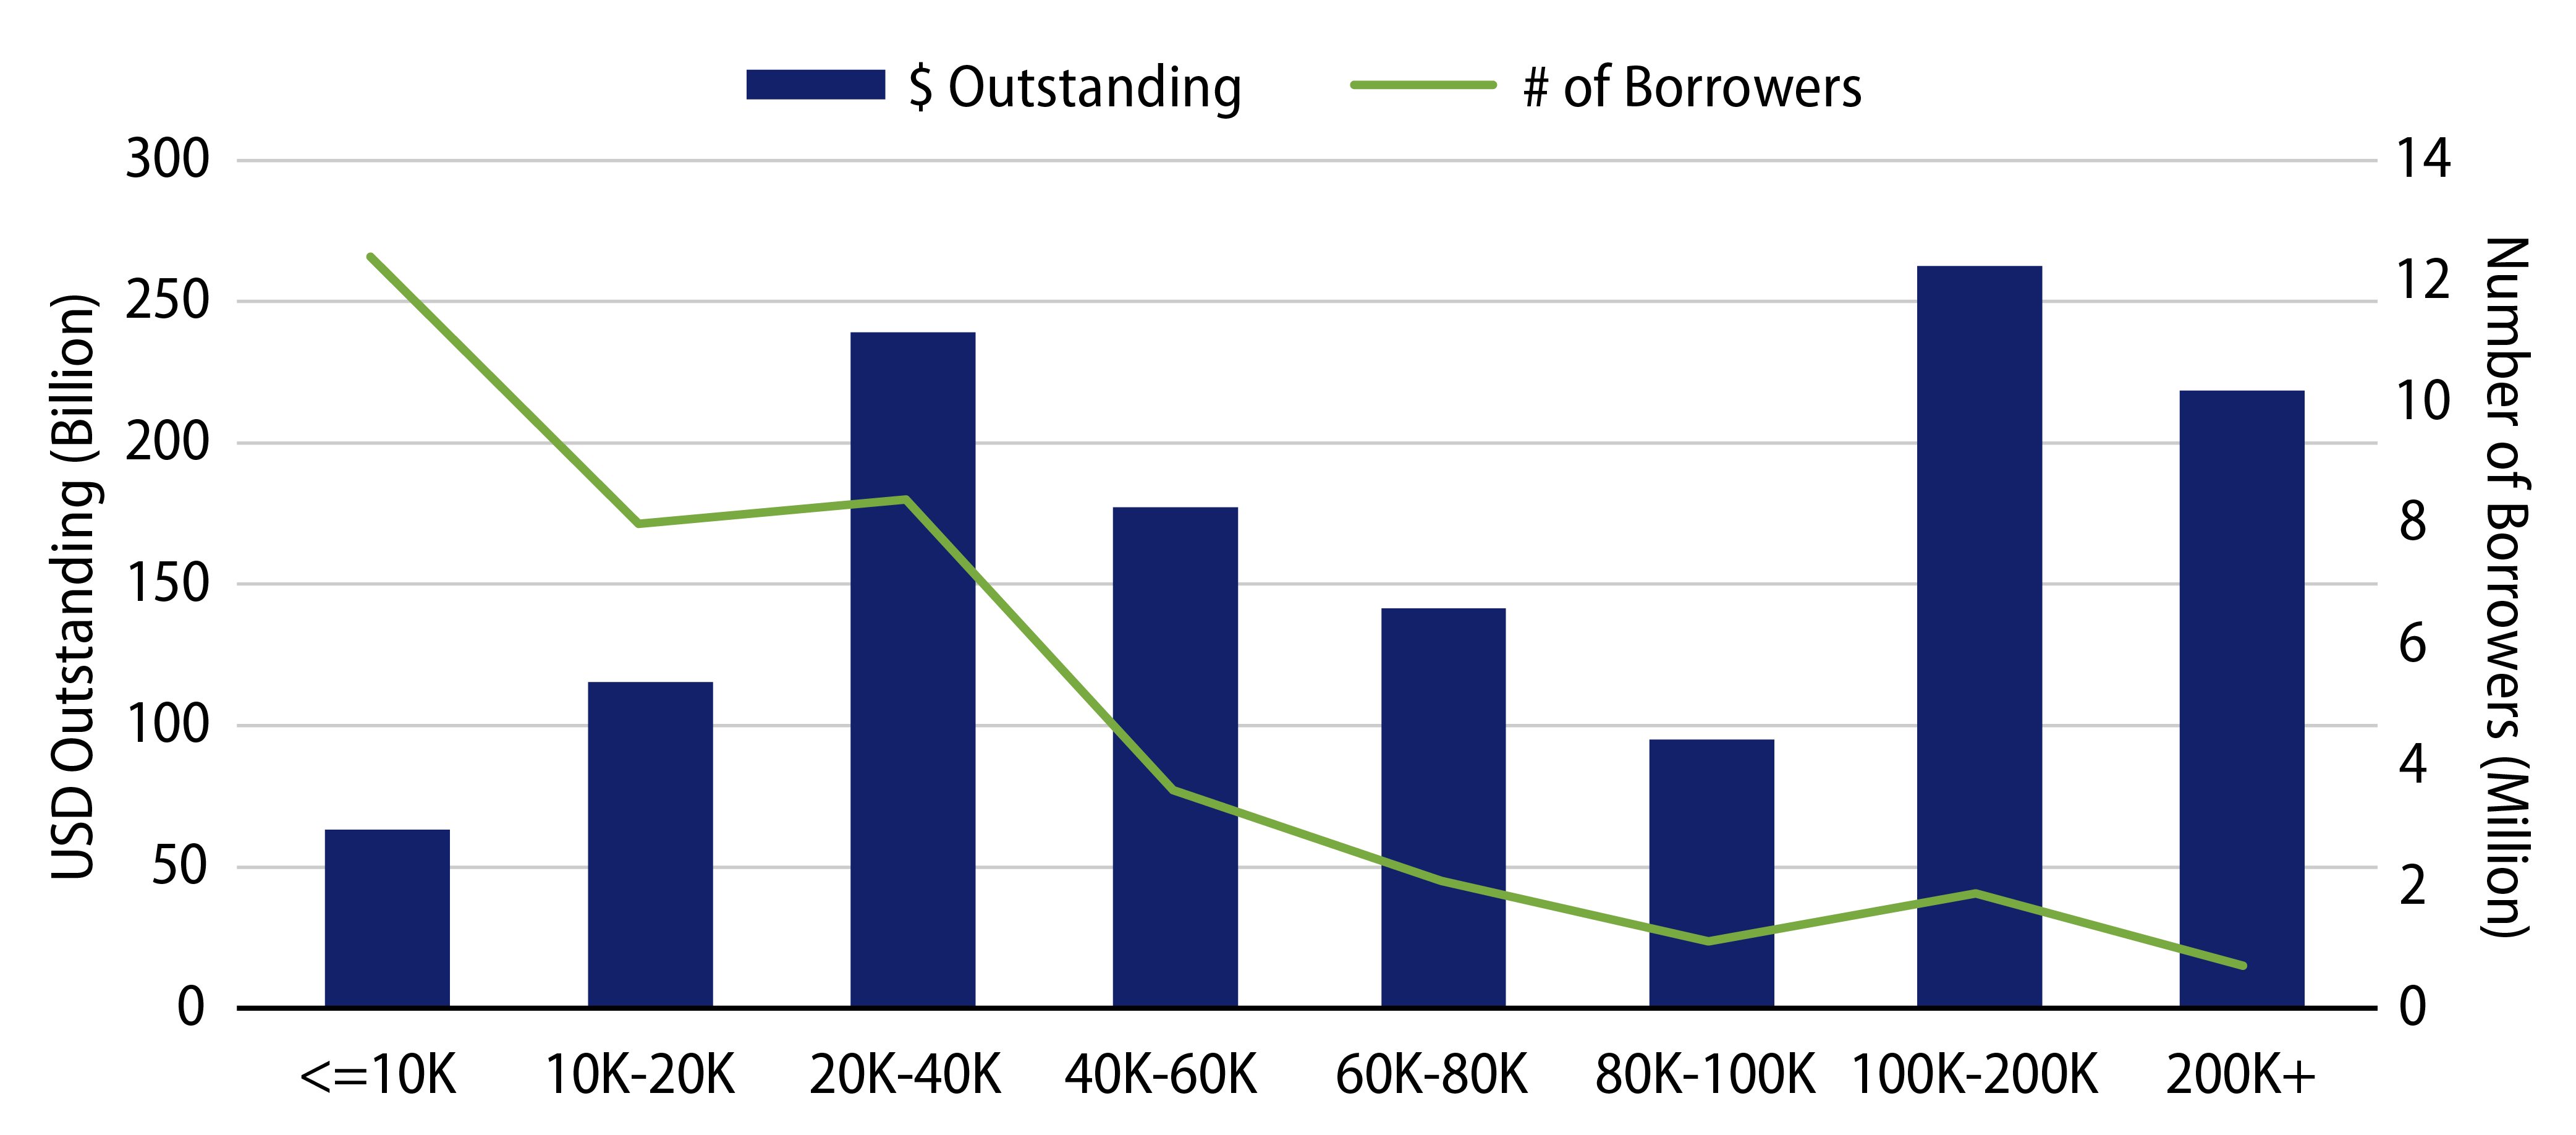 Explore Federal Direct Student Loan Portfolio by Borrower Debt Size.